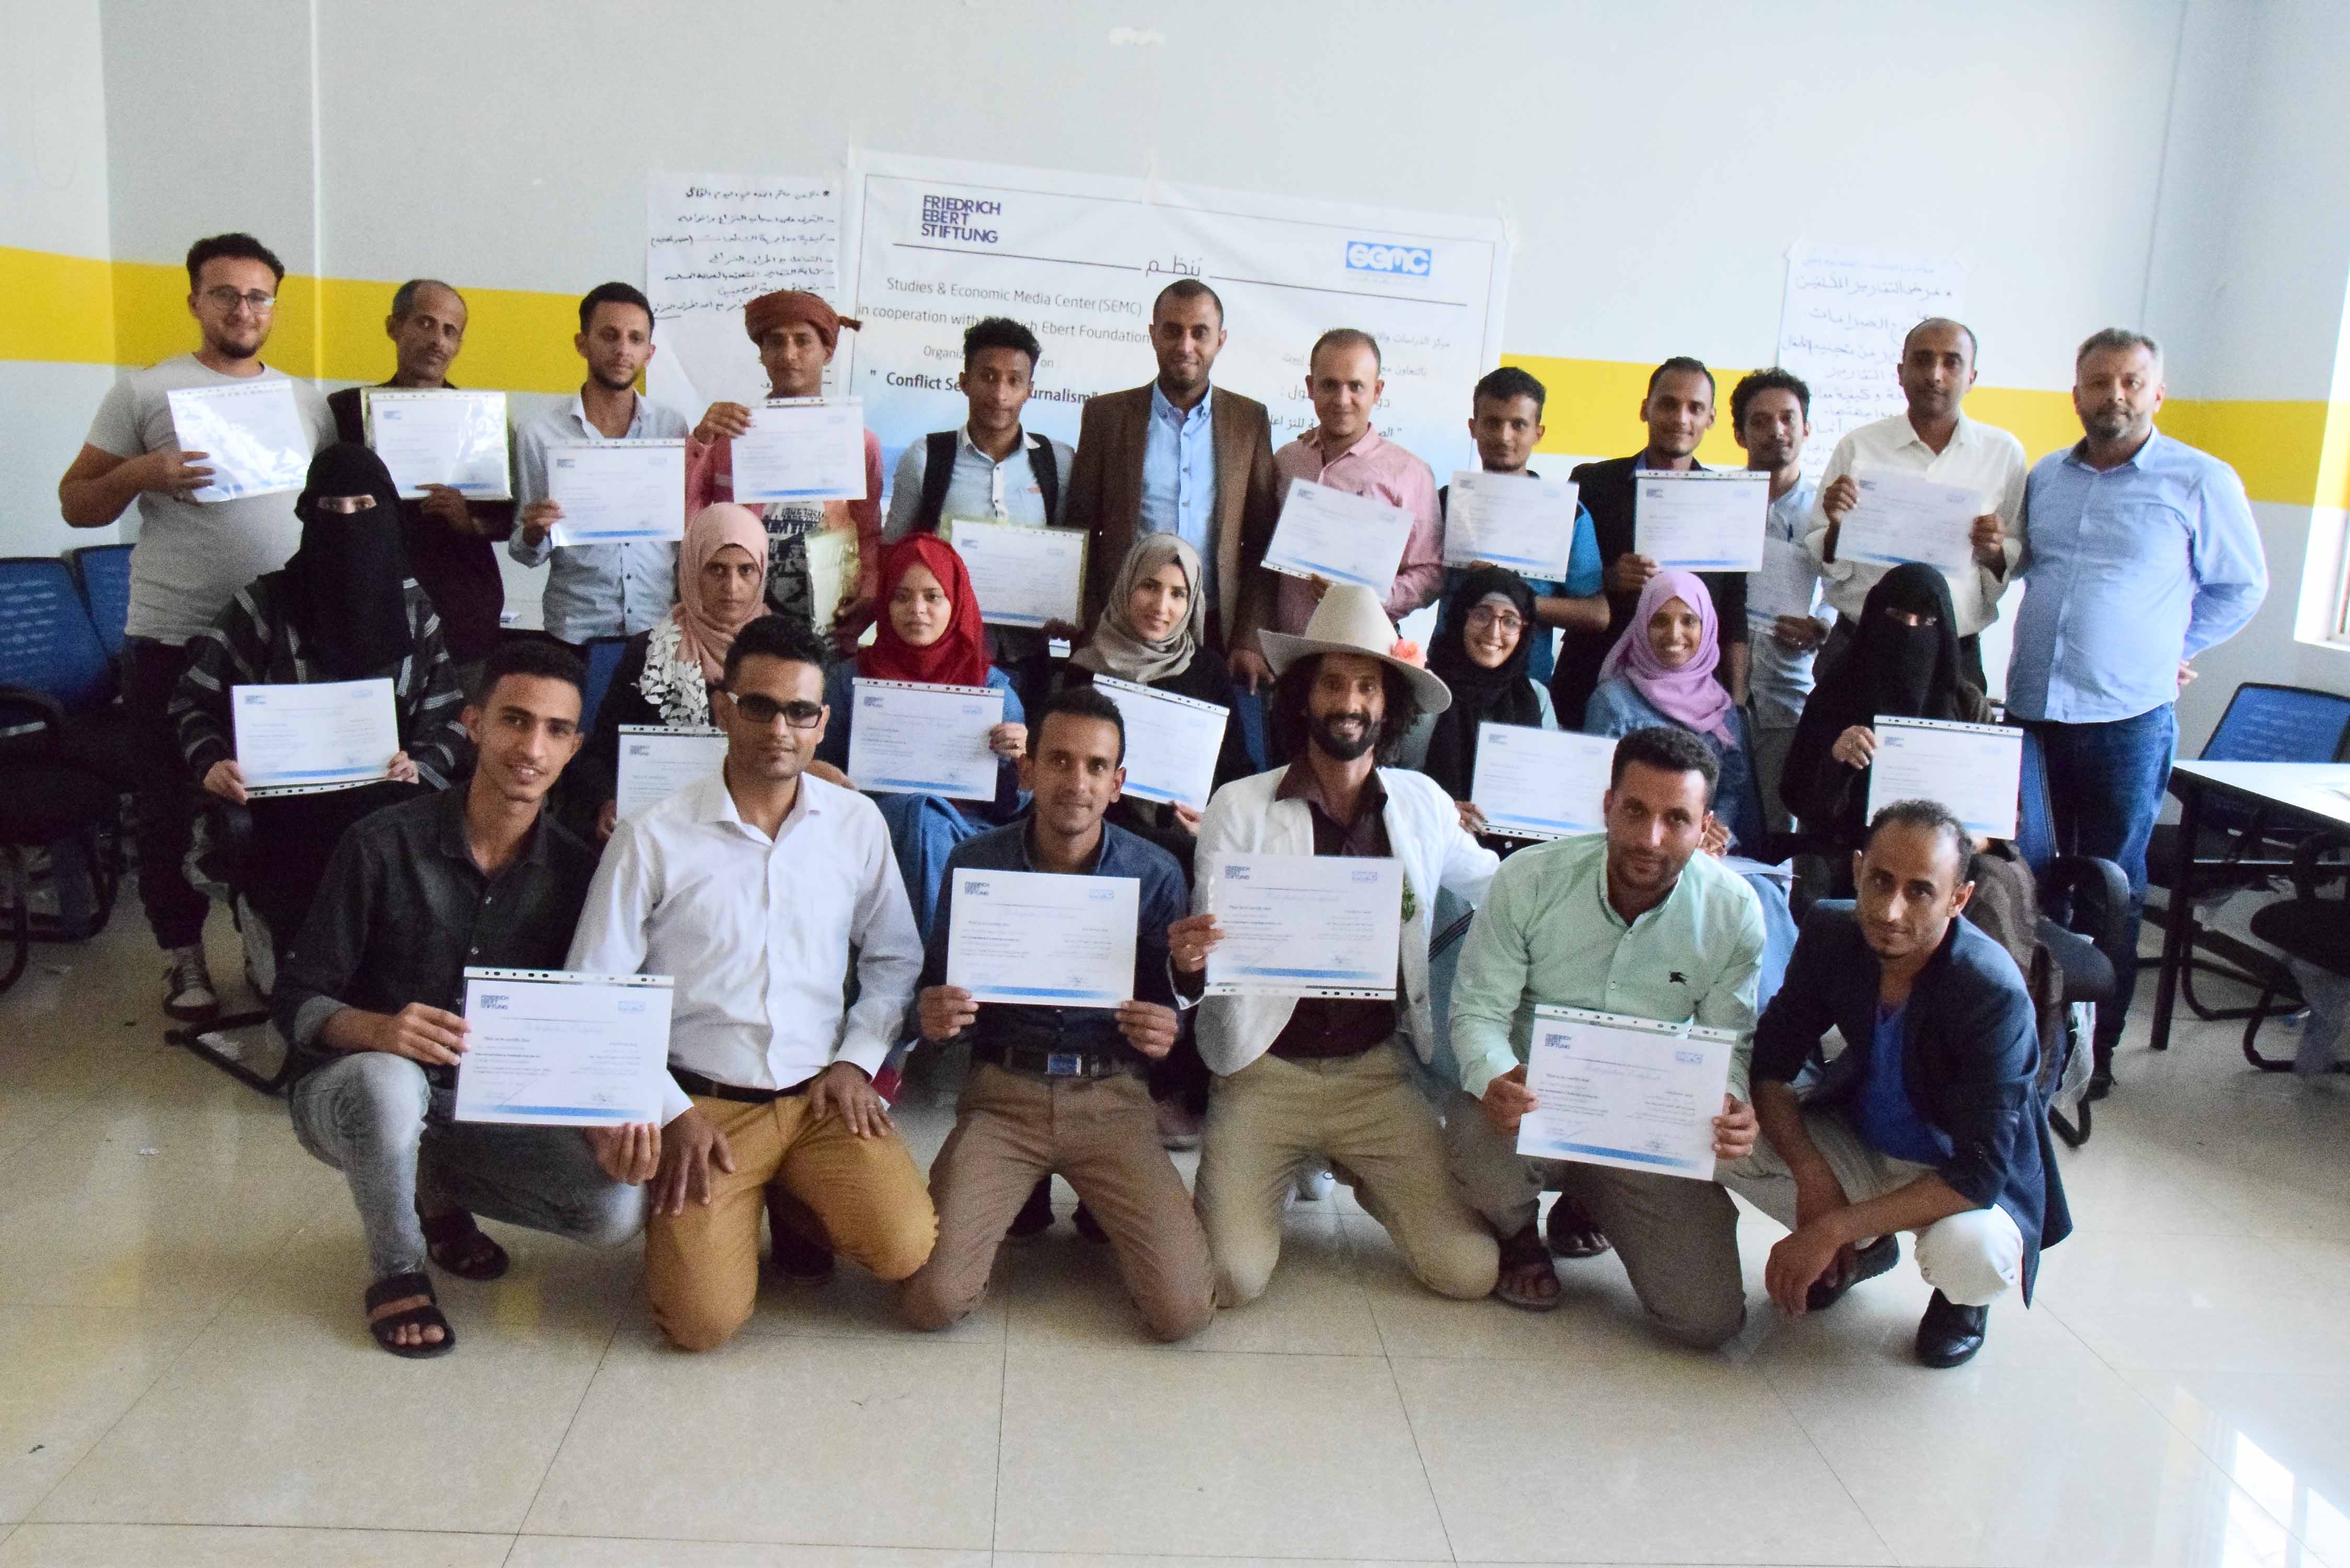 SEMC Training: Journalists Speak their Humanitarian Conscience